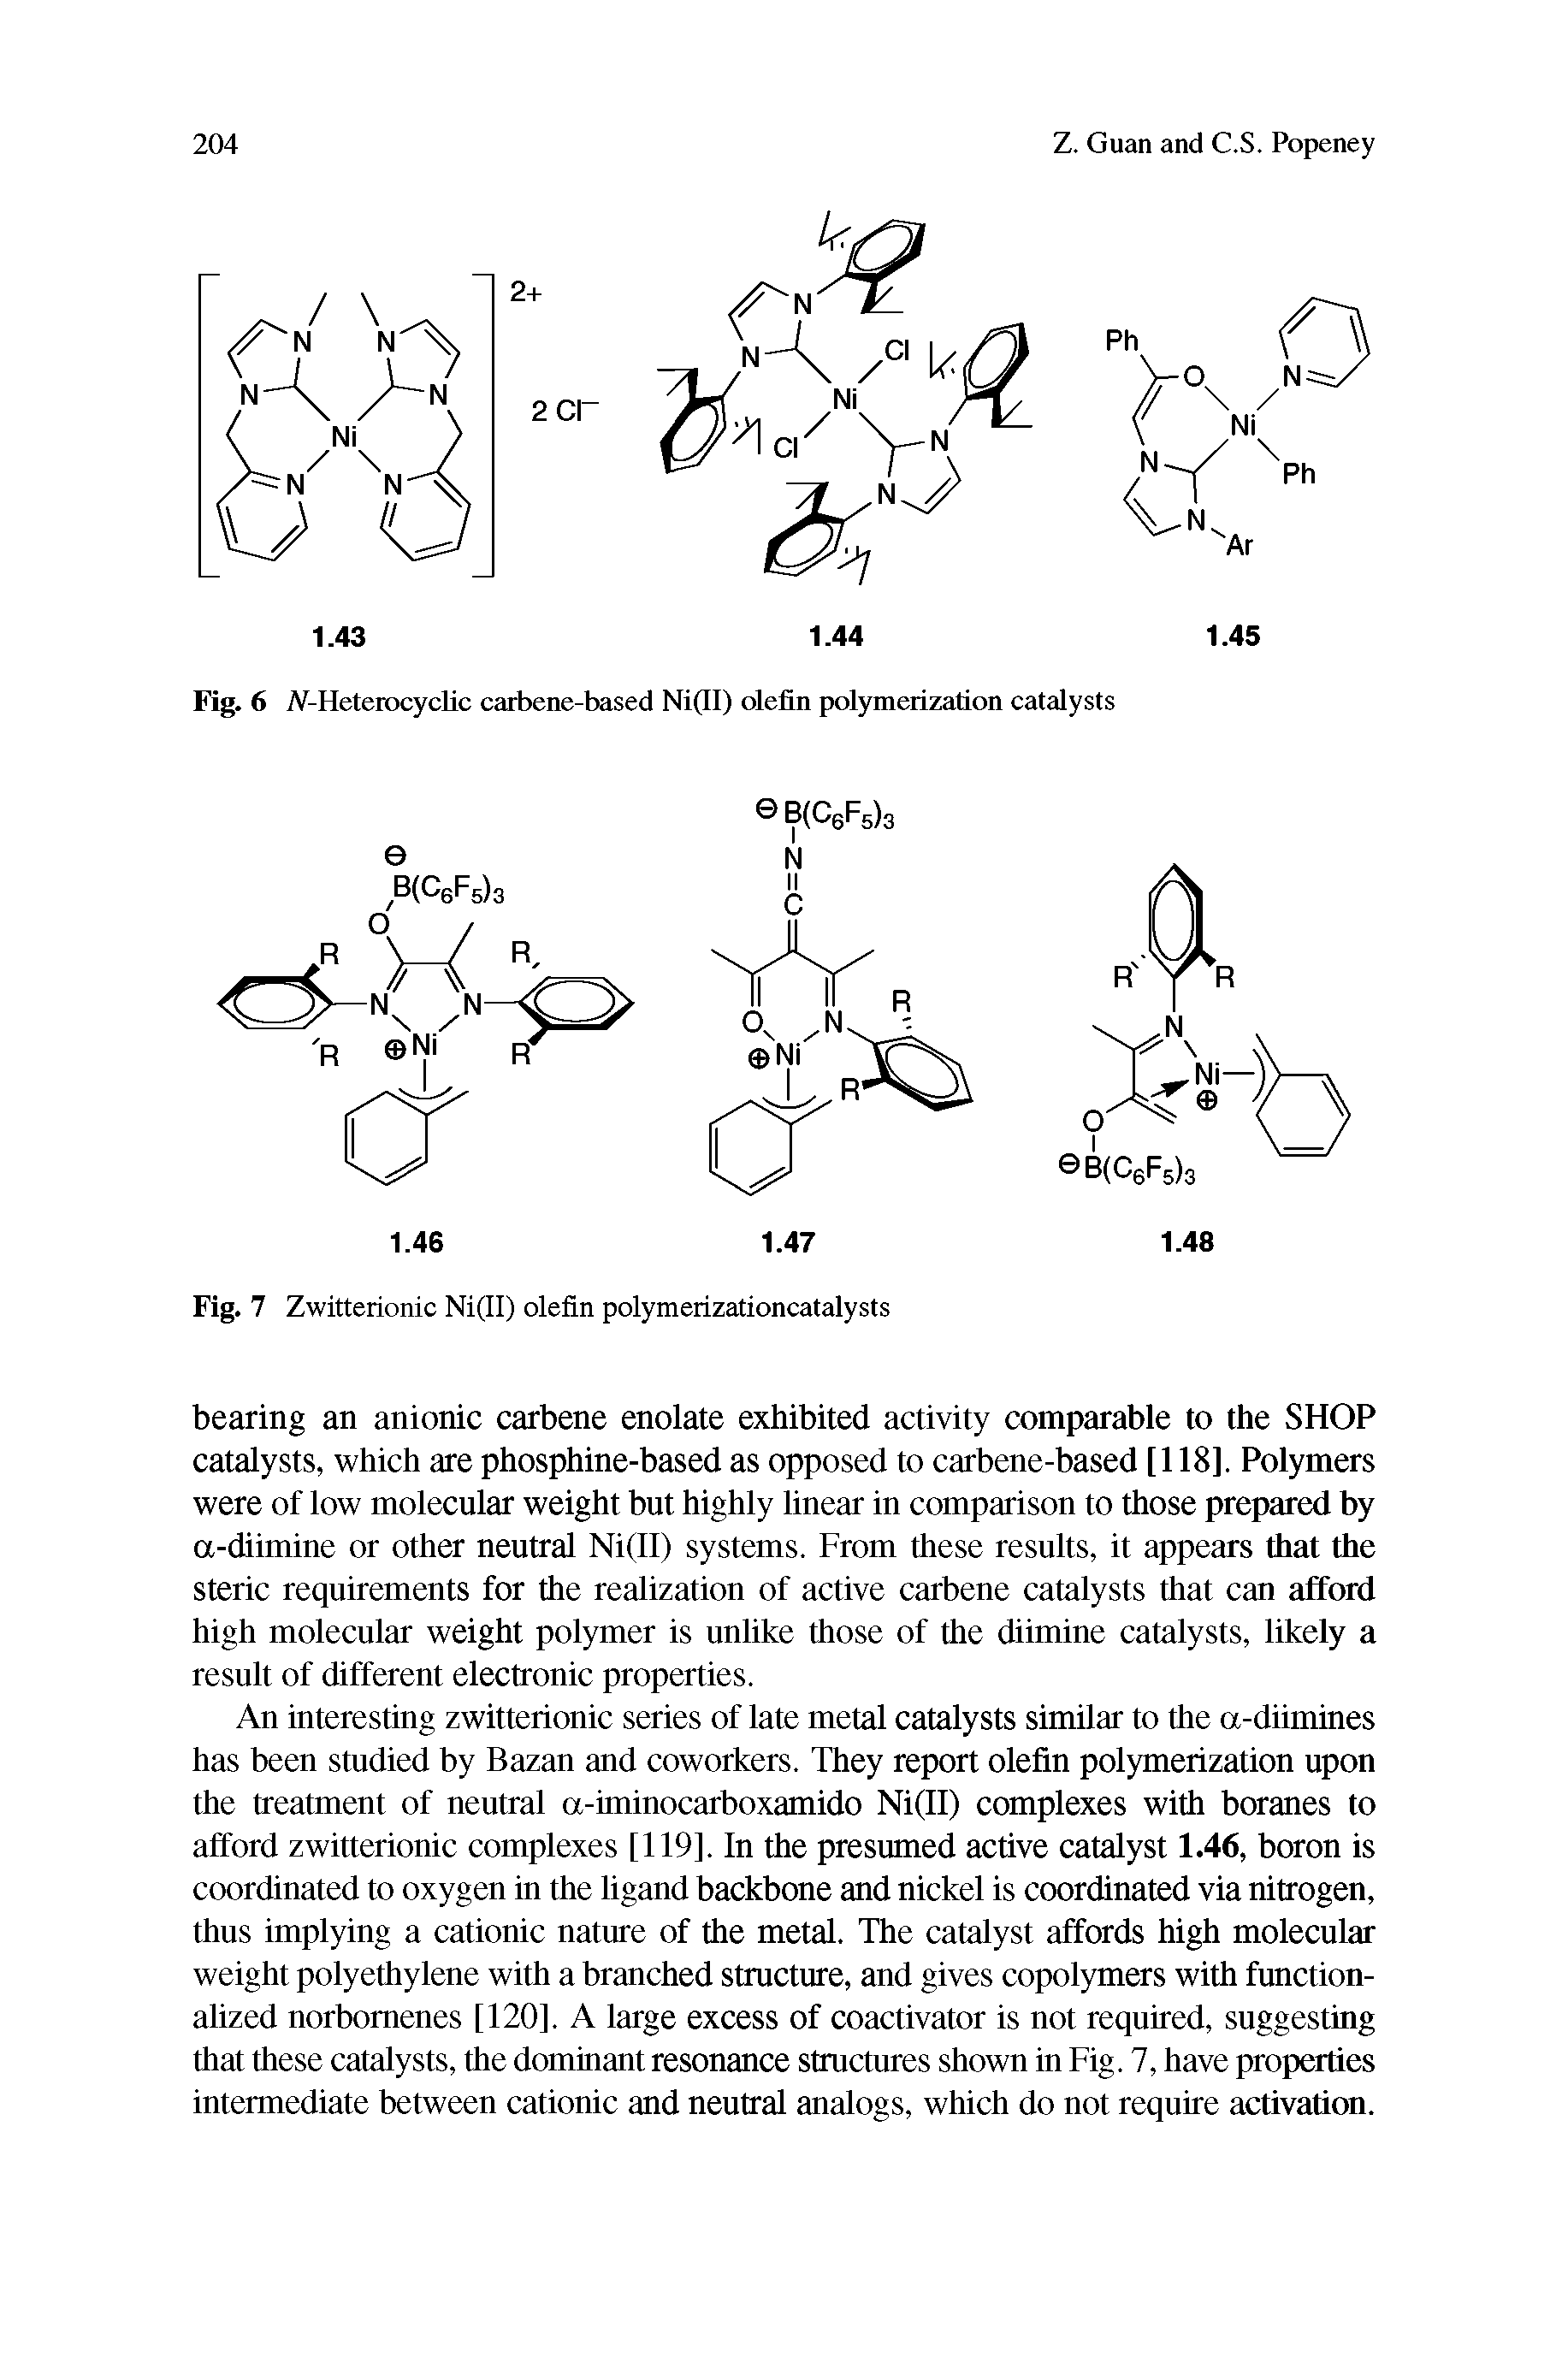 Fig. 6 /V-IIctcmcyclic carbene-based Ni(II) olefin polymerization catalysts...